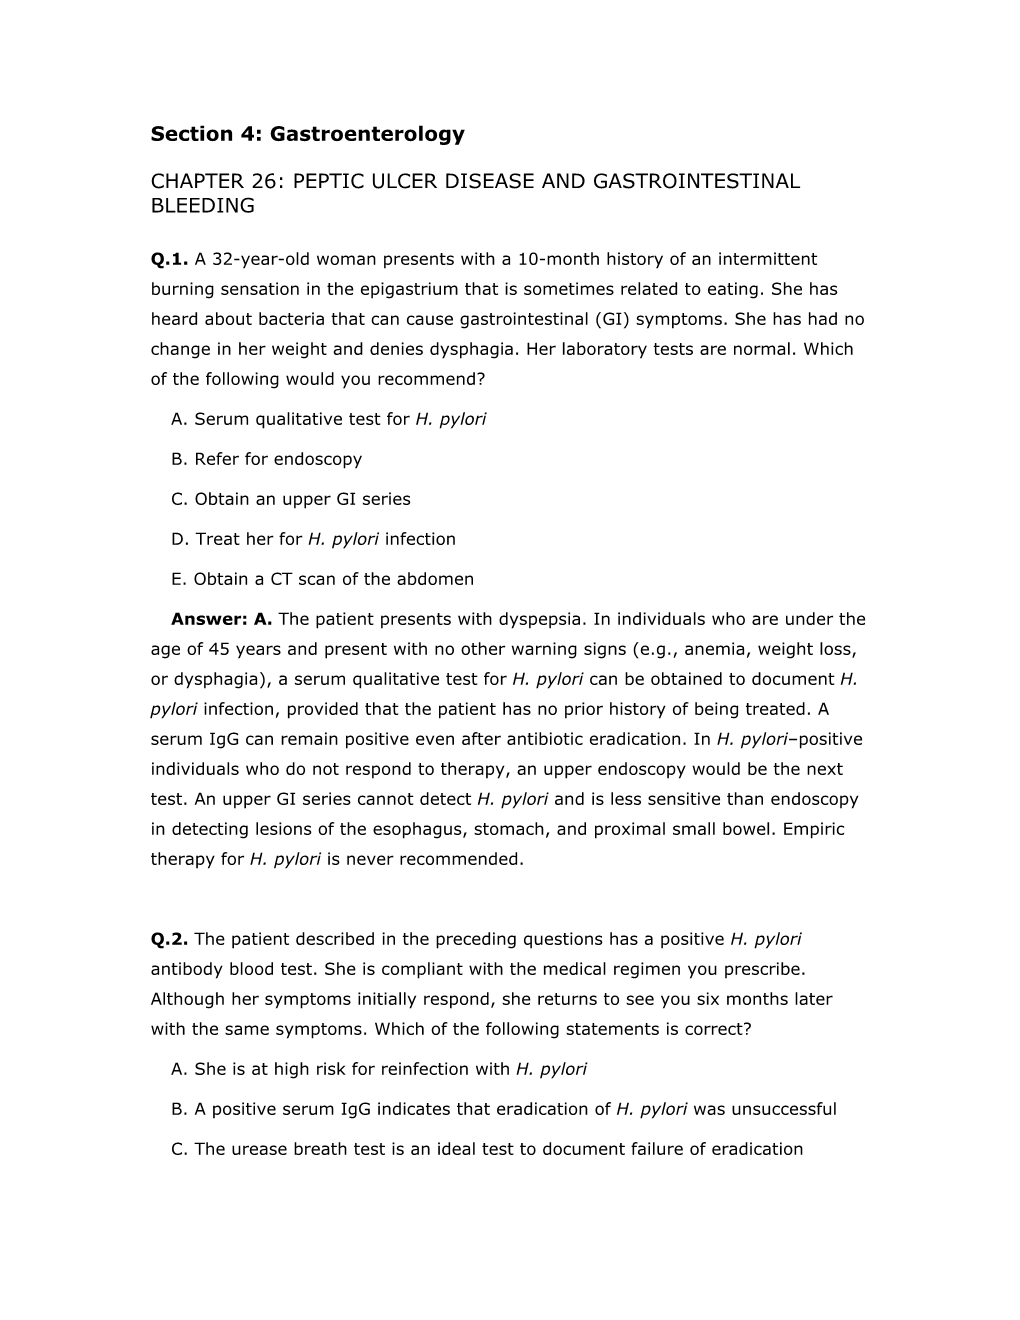 Peptic Ulcer Disease and Gastrointestinal Bleeding